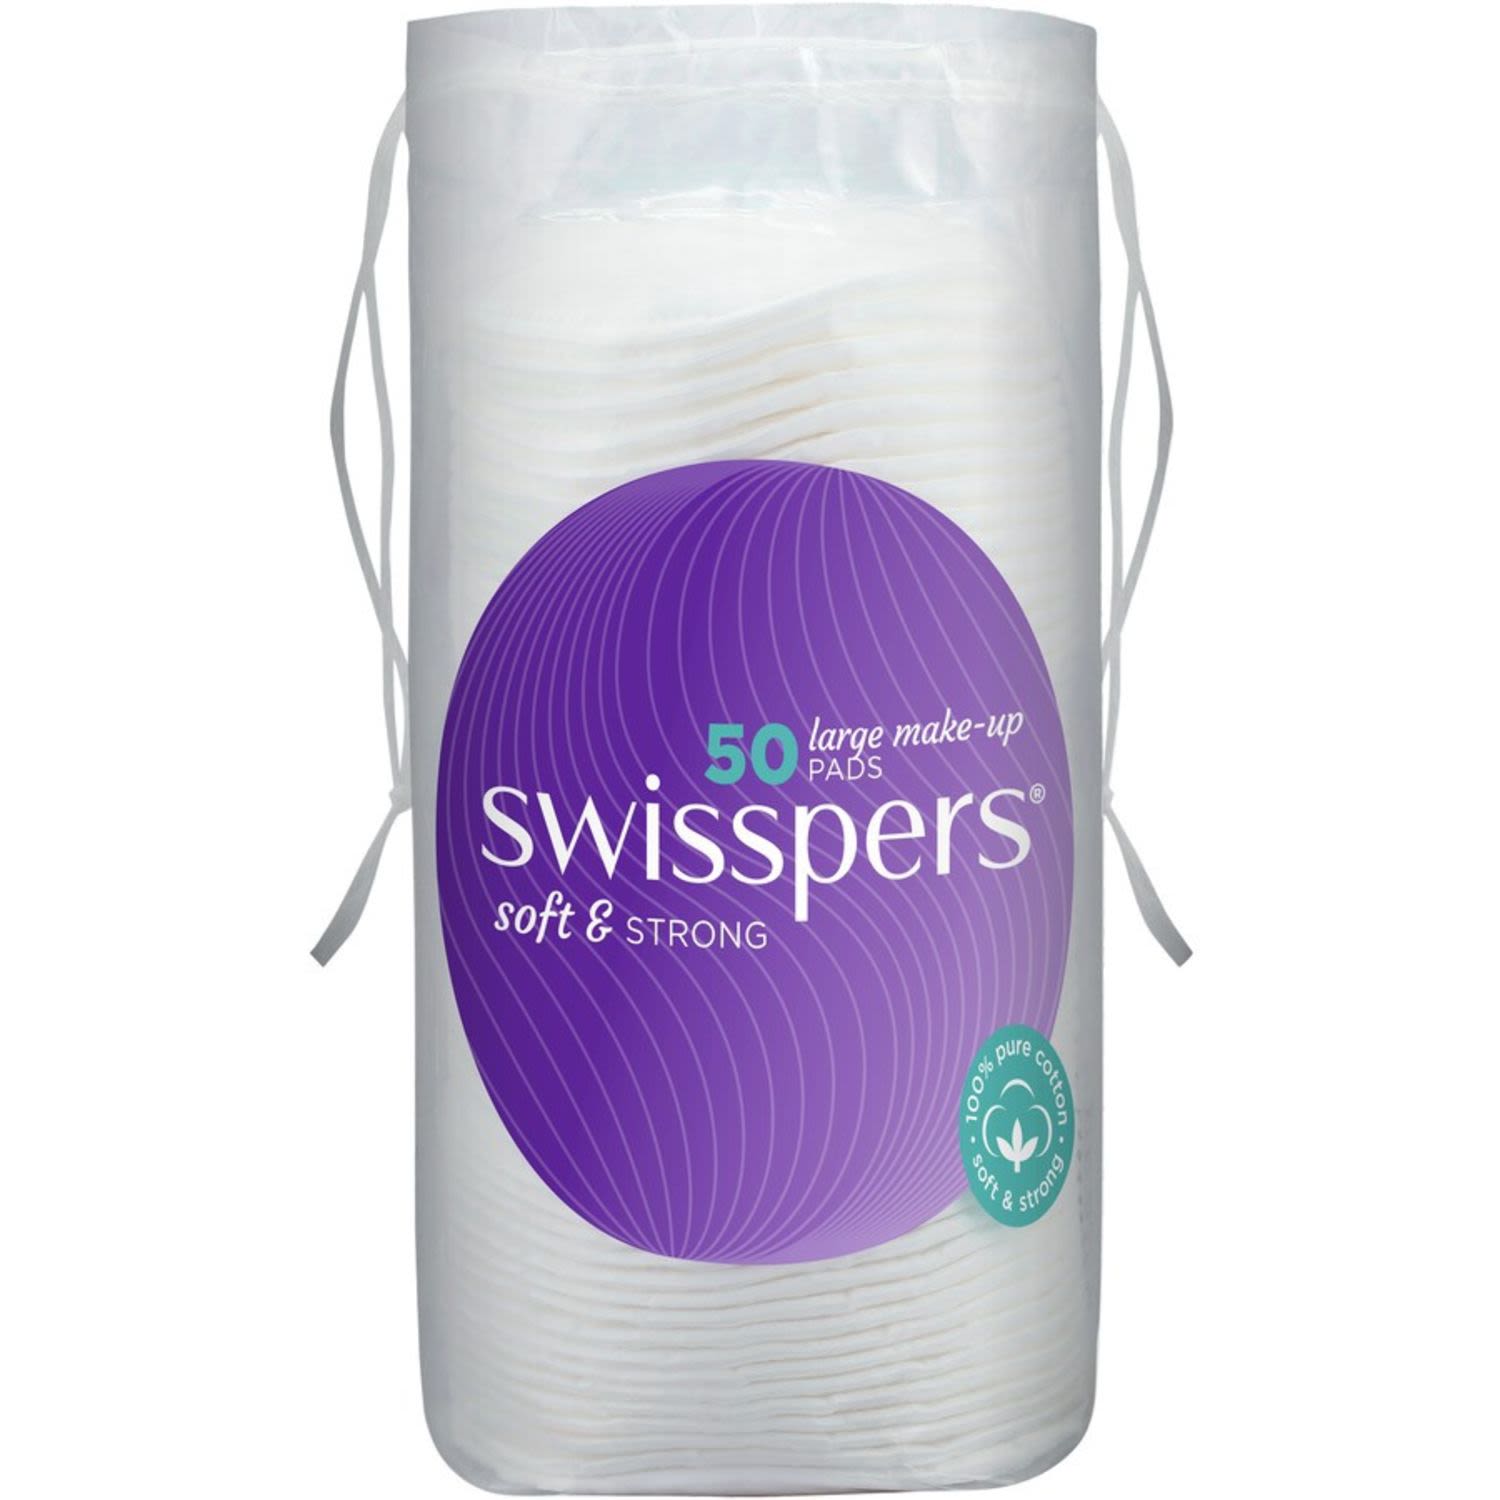 Swisspers Makeup Pads Cotton Large, 50 Each